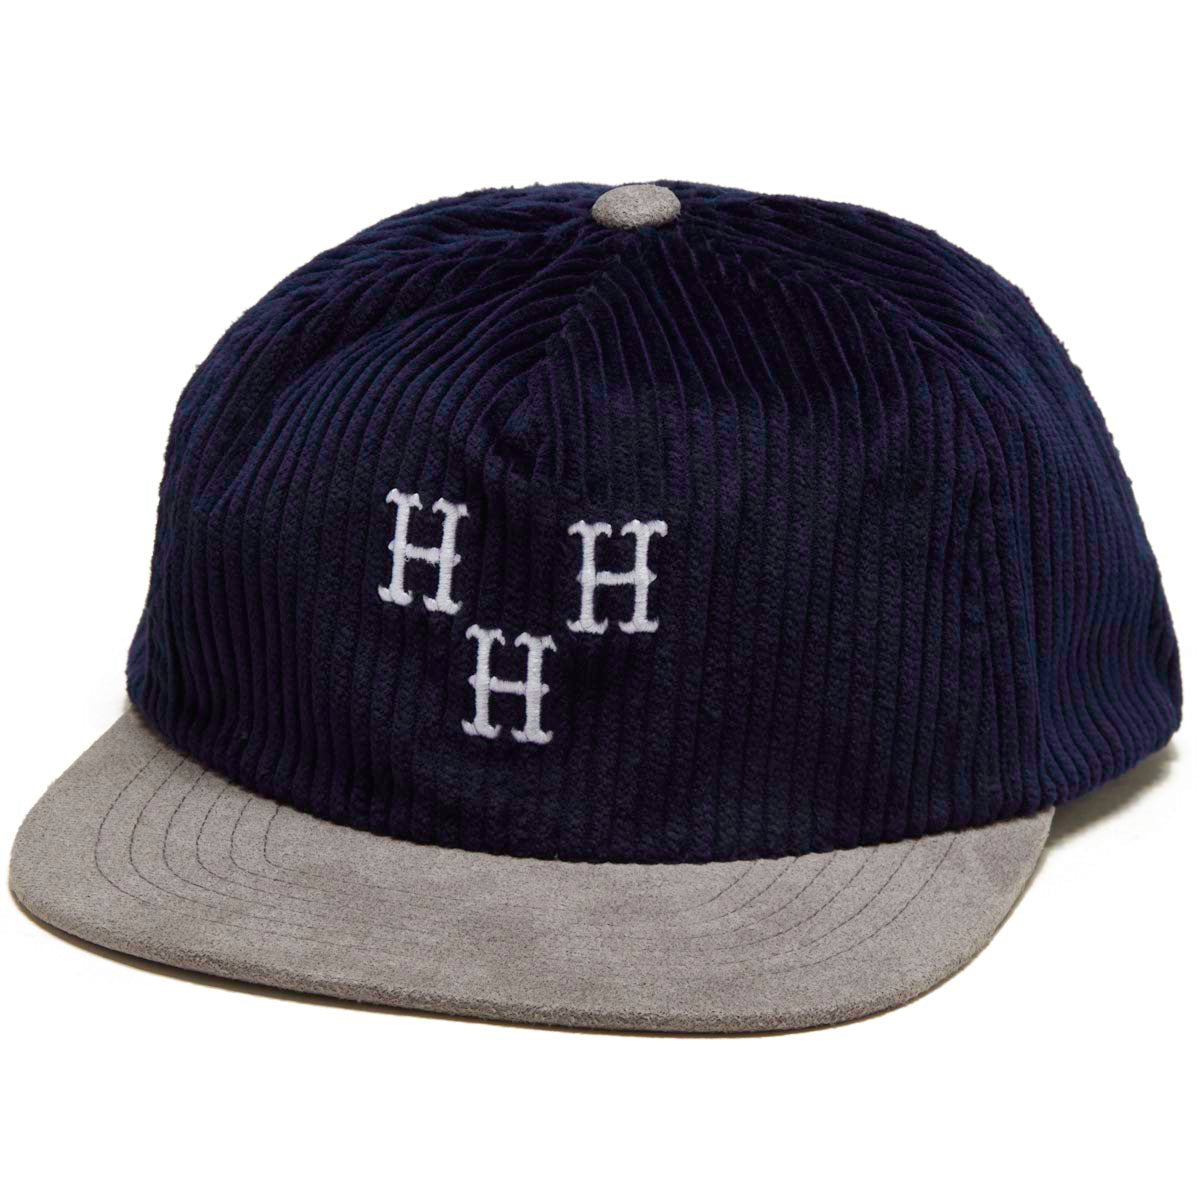 HUF Hat Trick Snapback Hat - Navy image 1